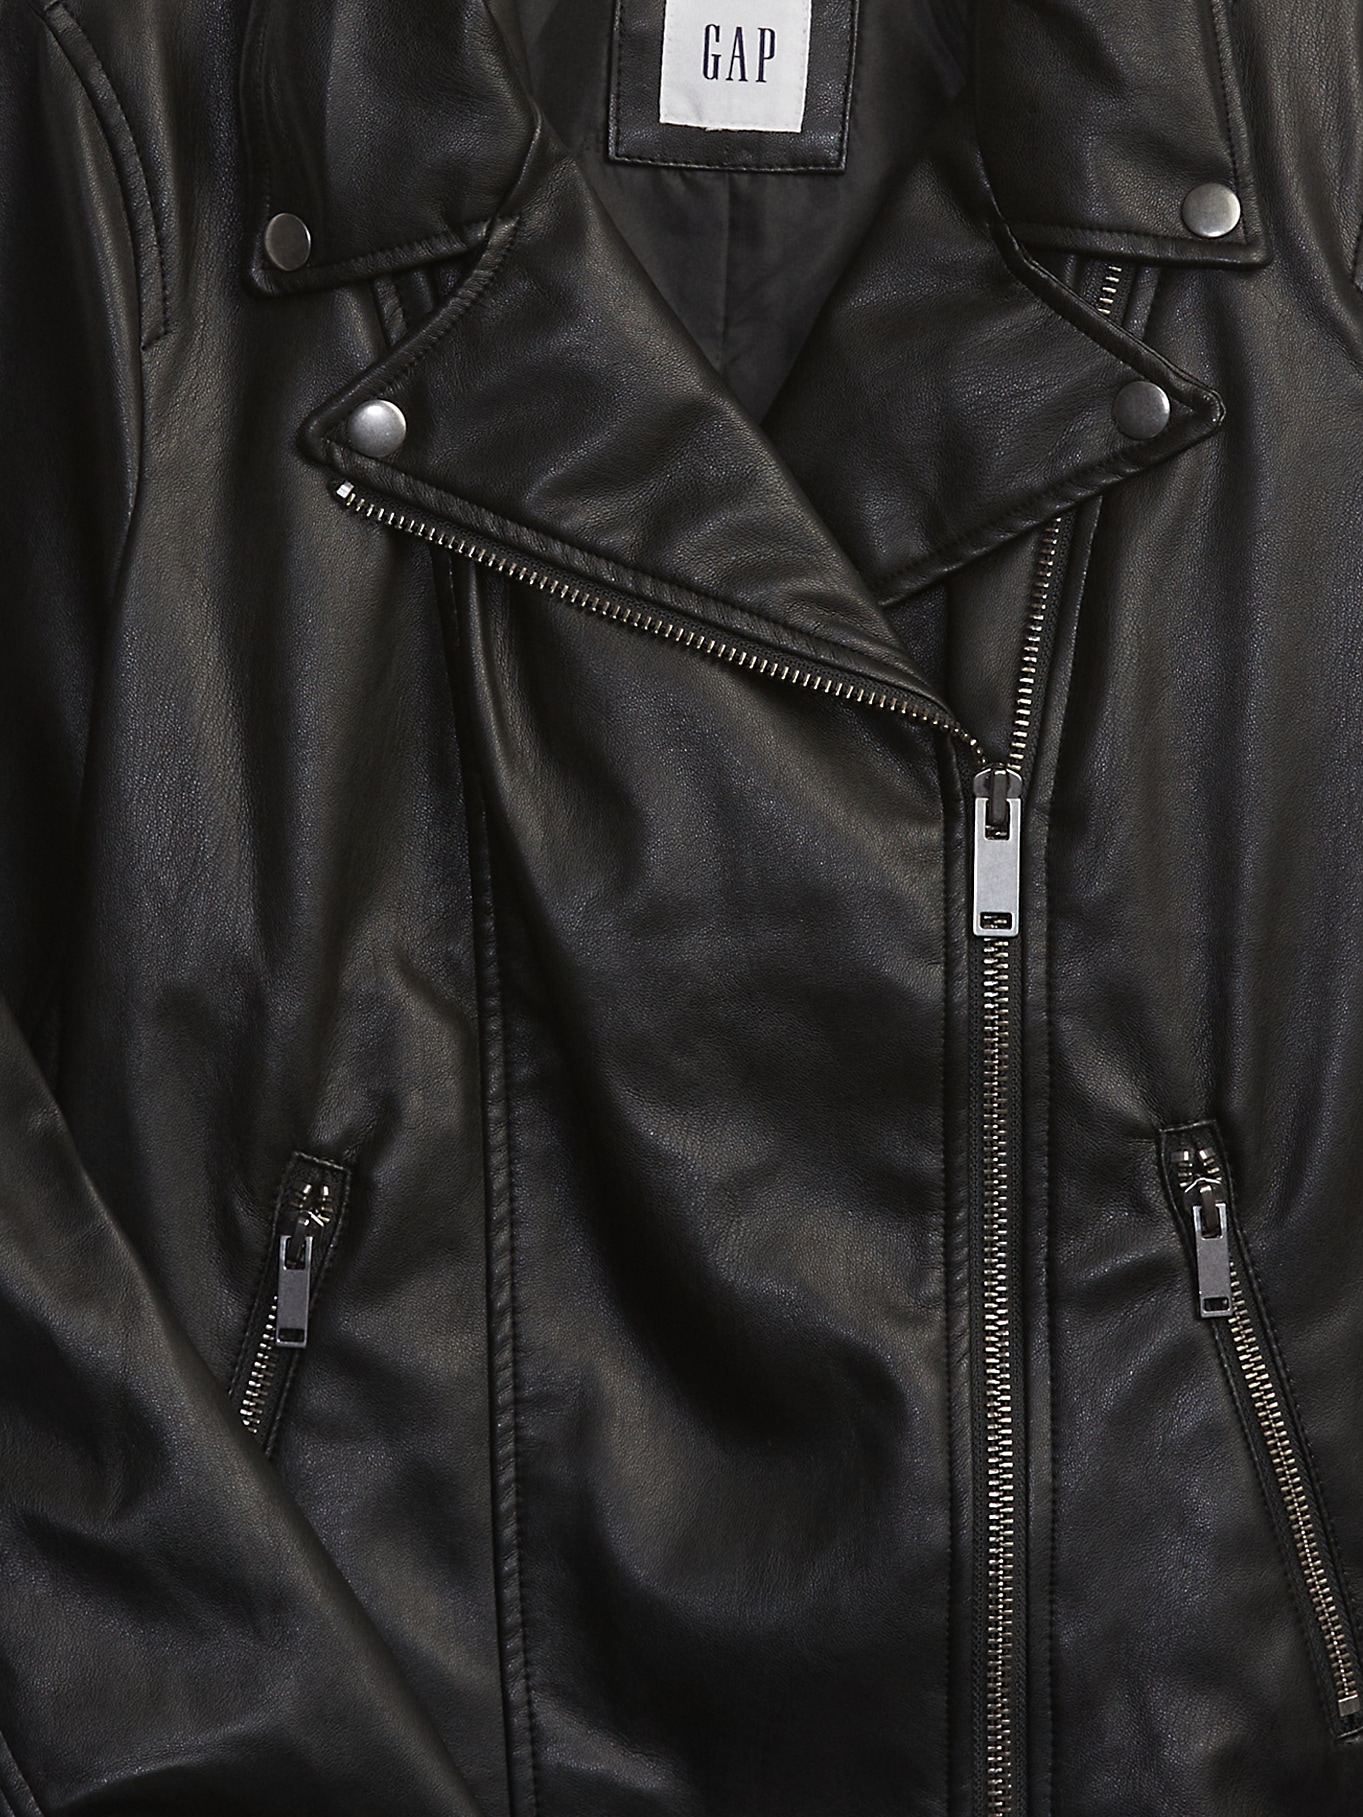 Women's Vegan Leather Moto Jacket by Gap Black Tall Size S